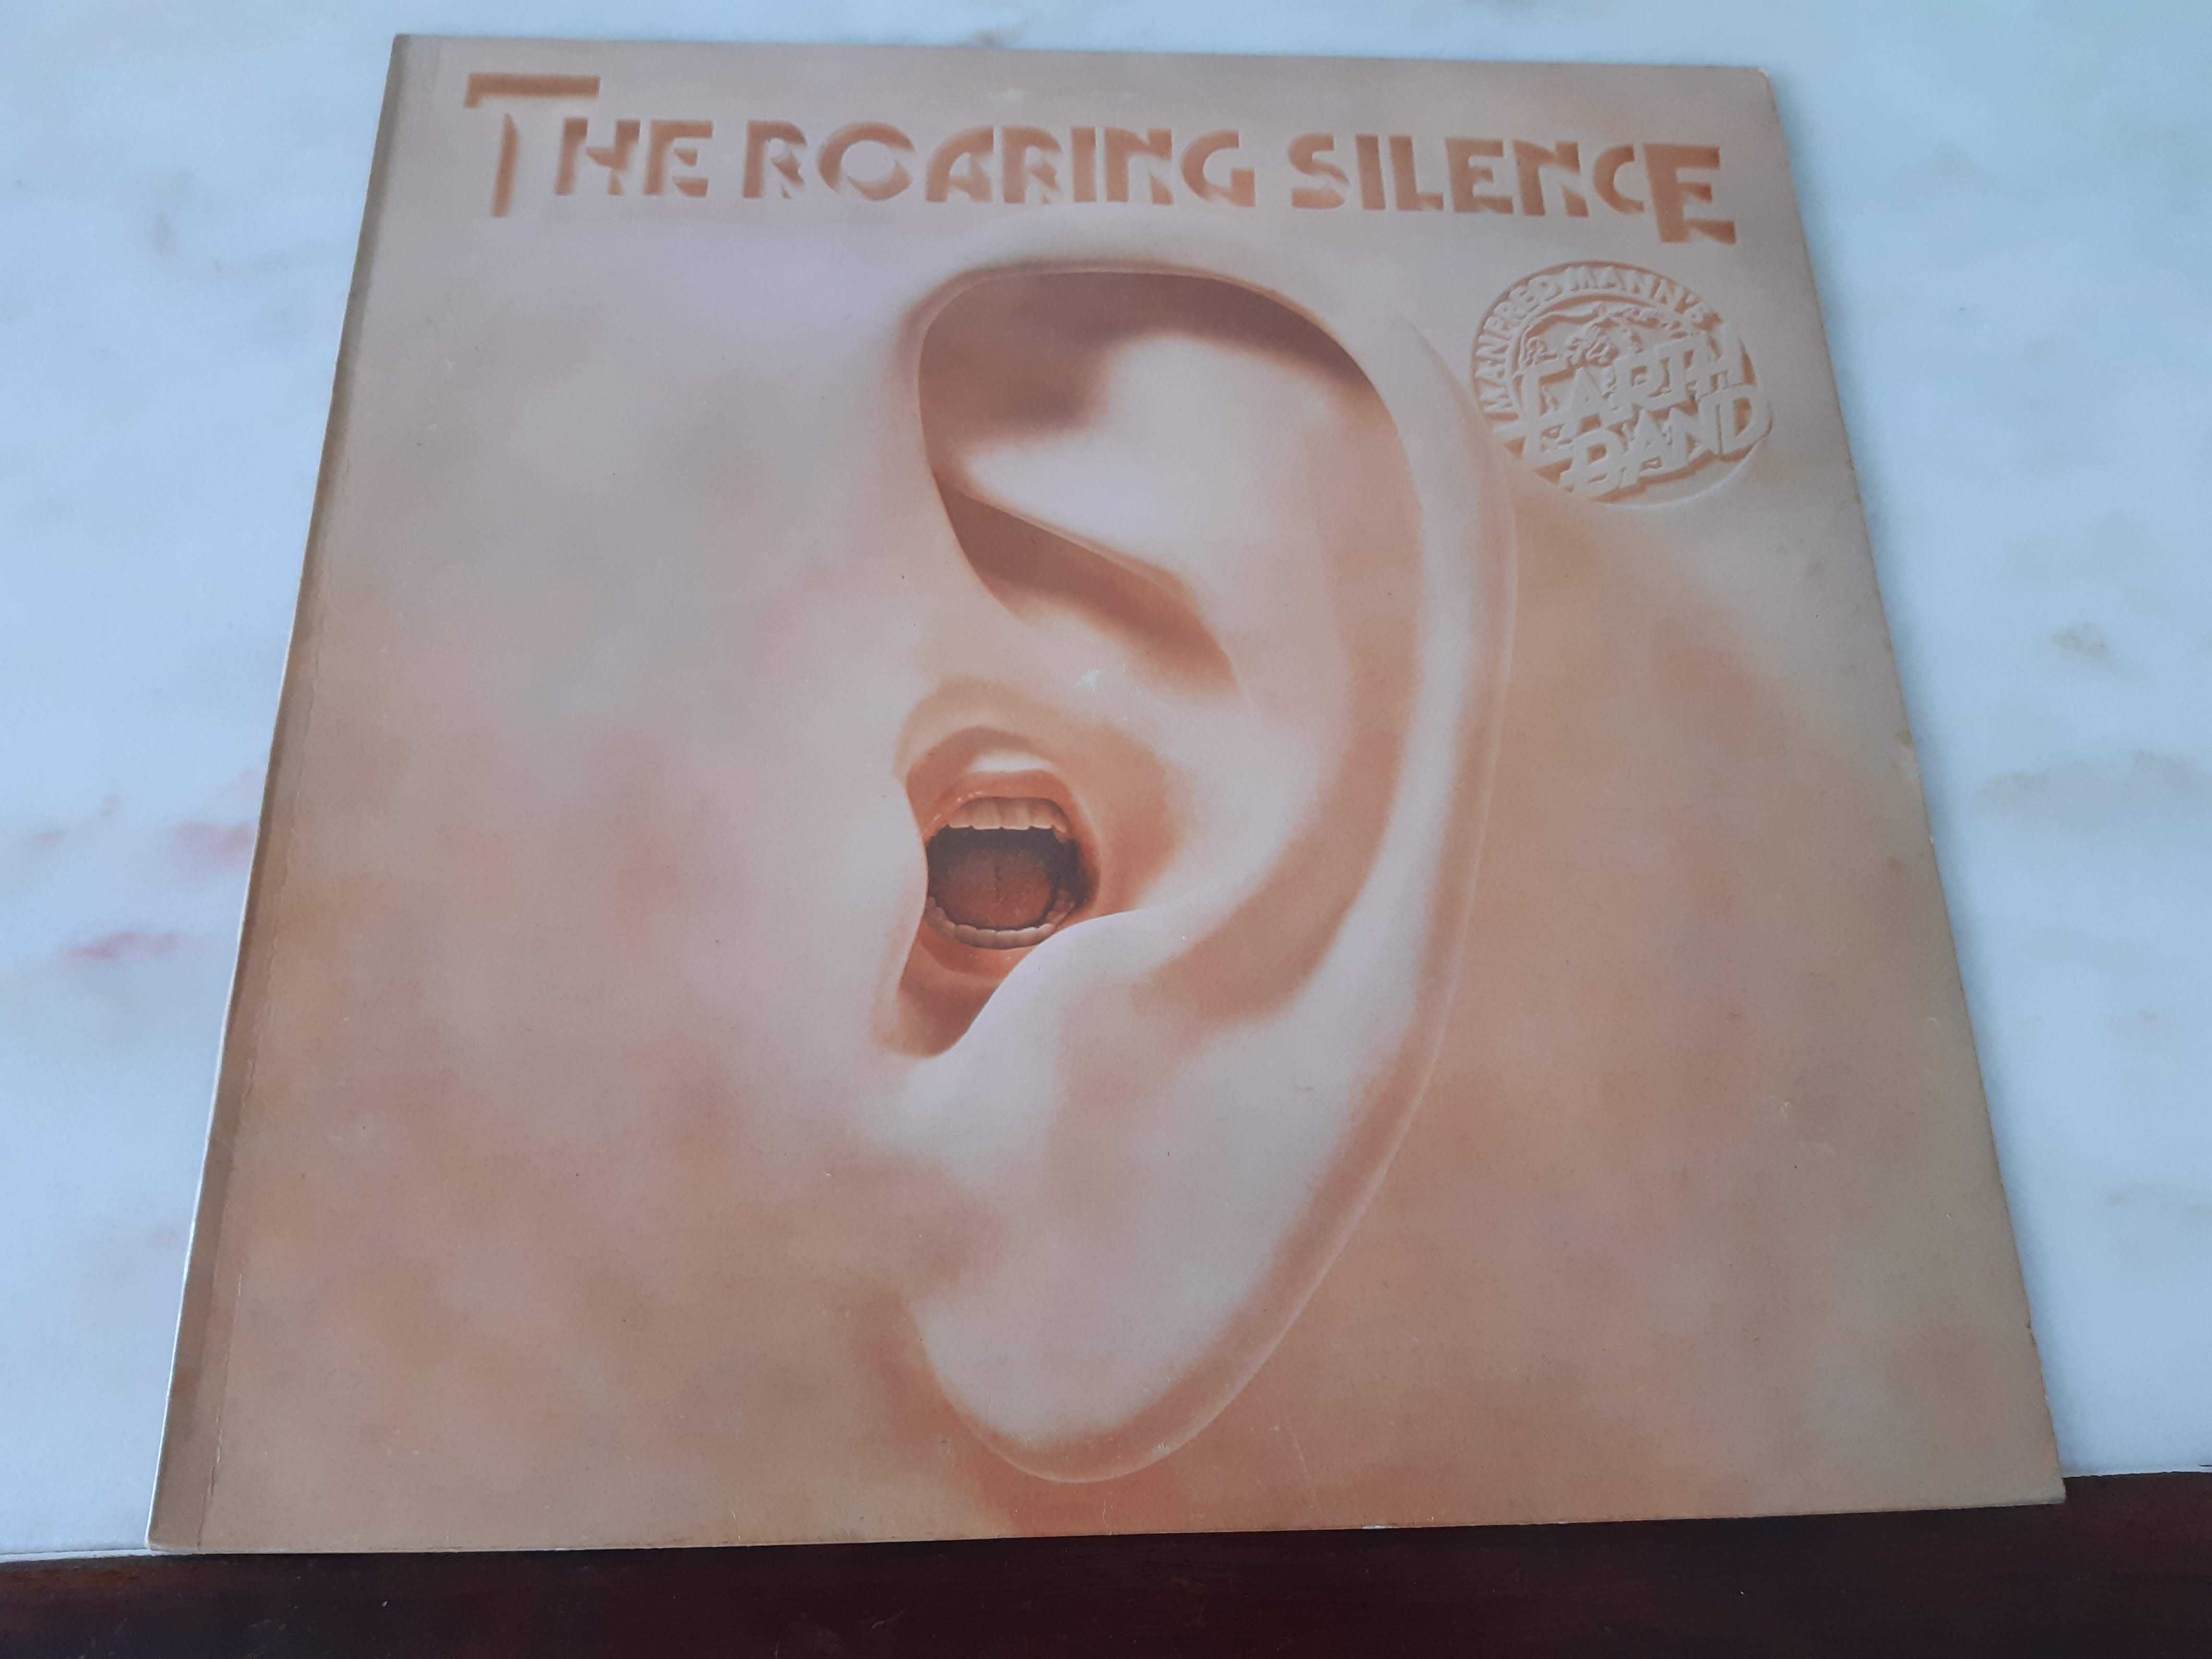 Álbum vinil The Roaring Silence de Manfred Mann’s Earth Band, 1976